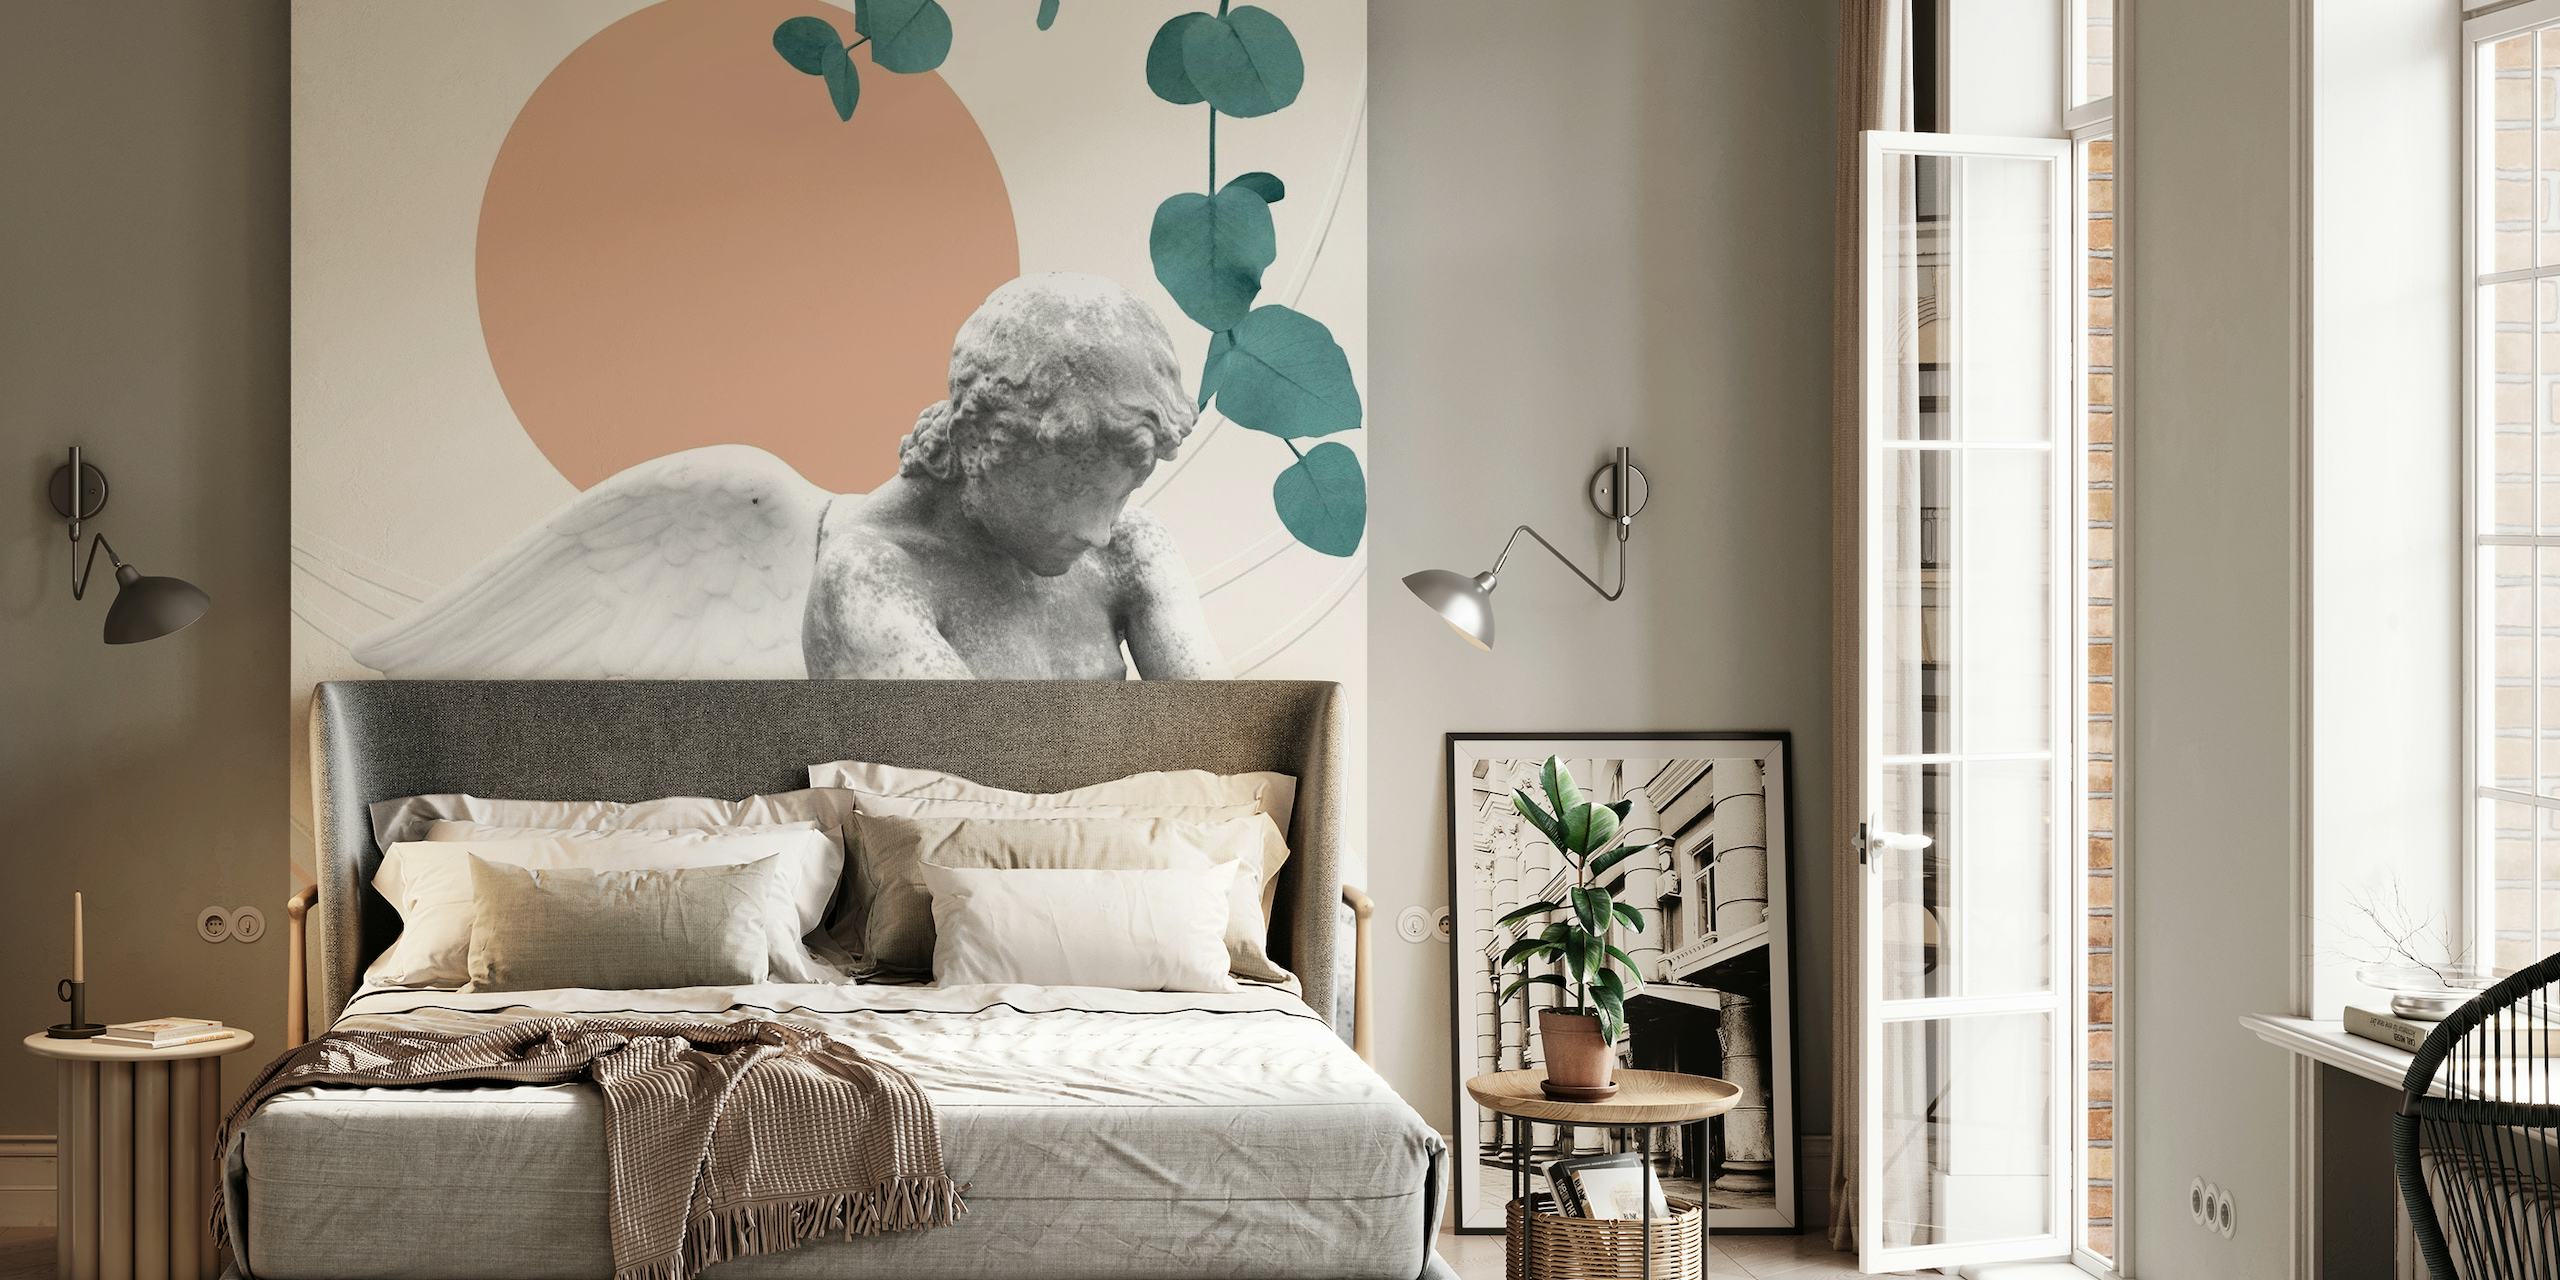 Eros abstrakt finesse vægmaleri med kerub, marmor teksturer, geometriske former og botaniske elementer.